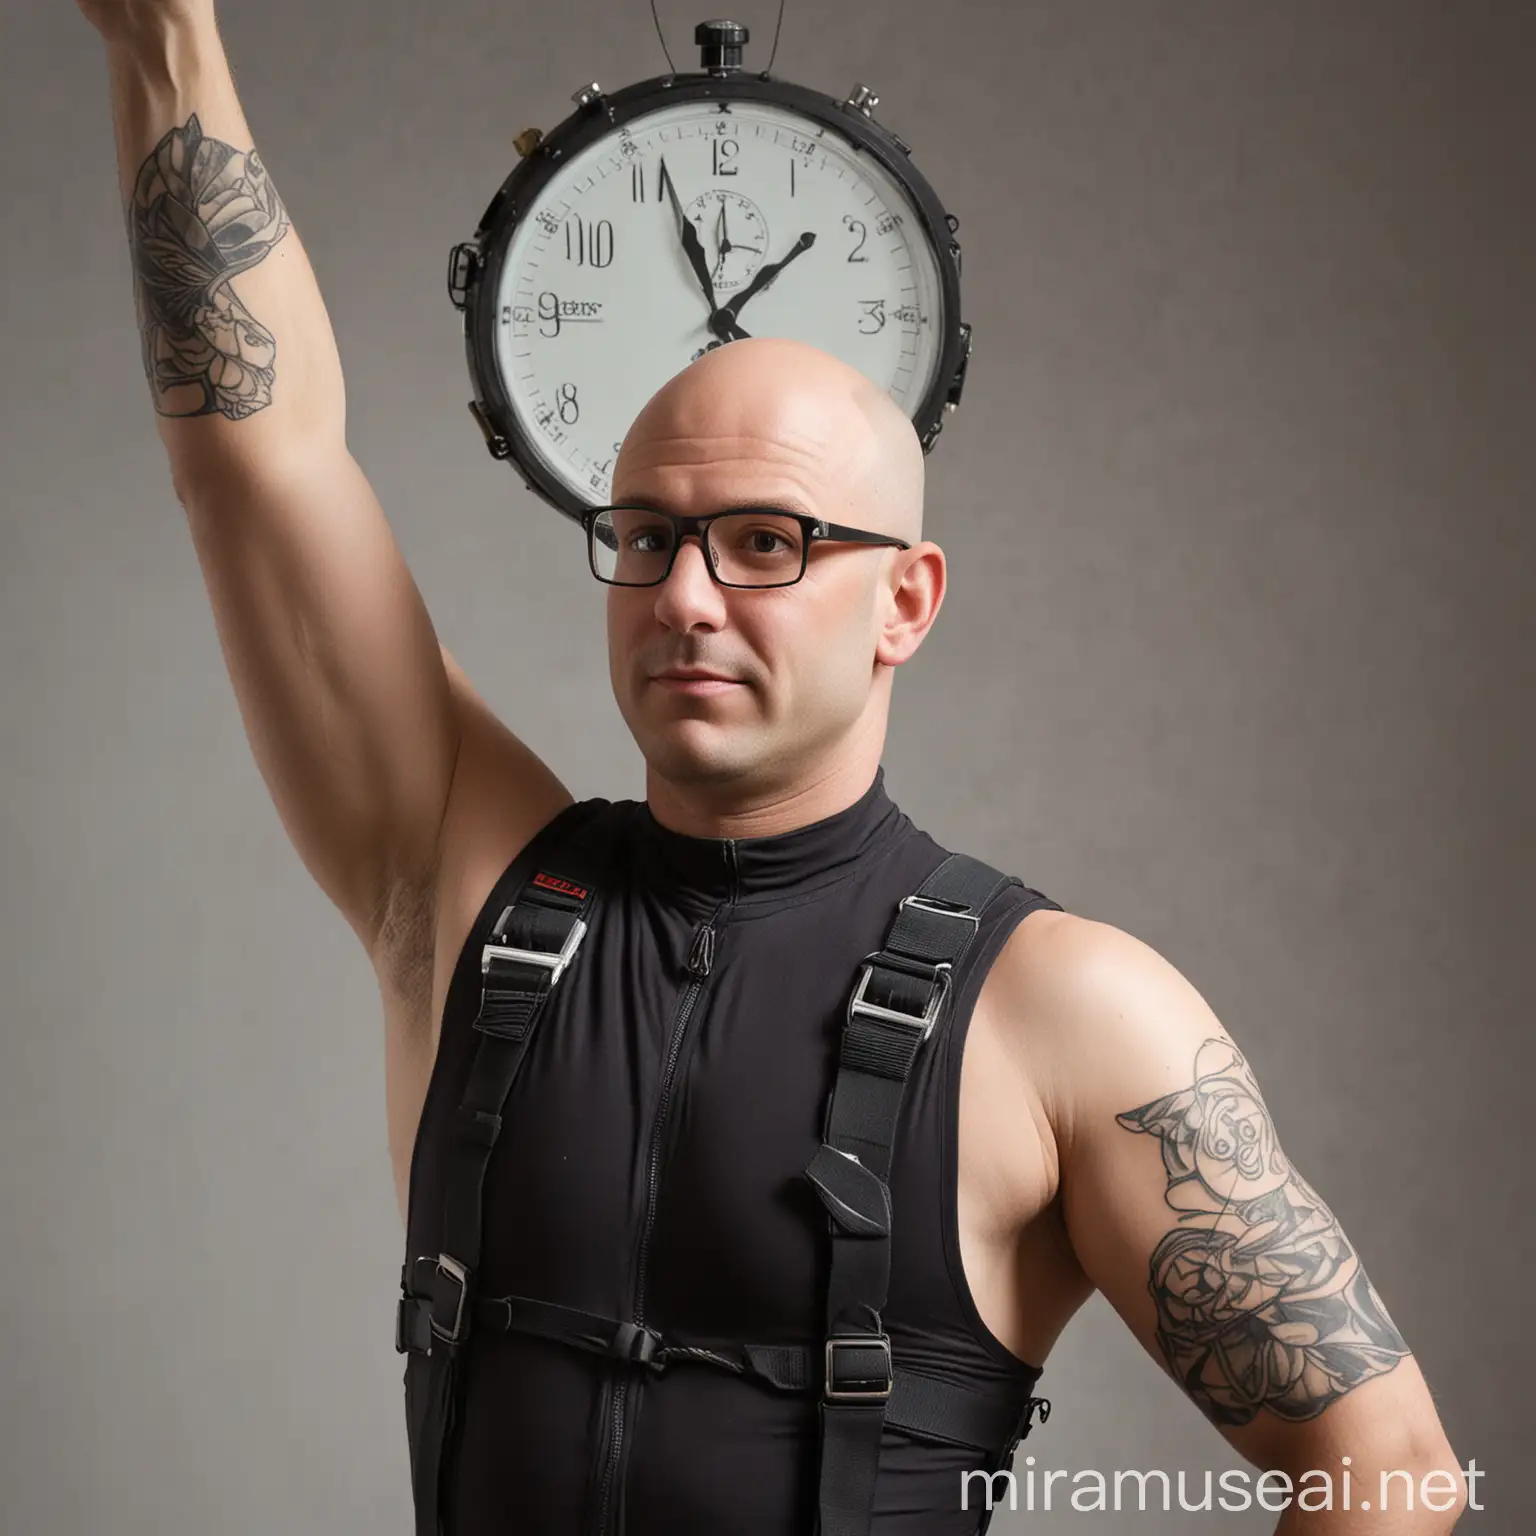 Male, white, semi-bald, skydiver, pilot, tall, glasses, 5´o clockshade, carpenter, architect, tatoo on left underarm.